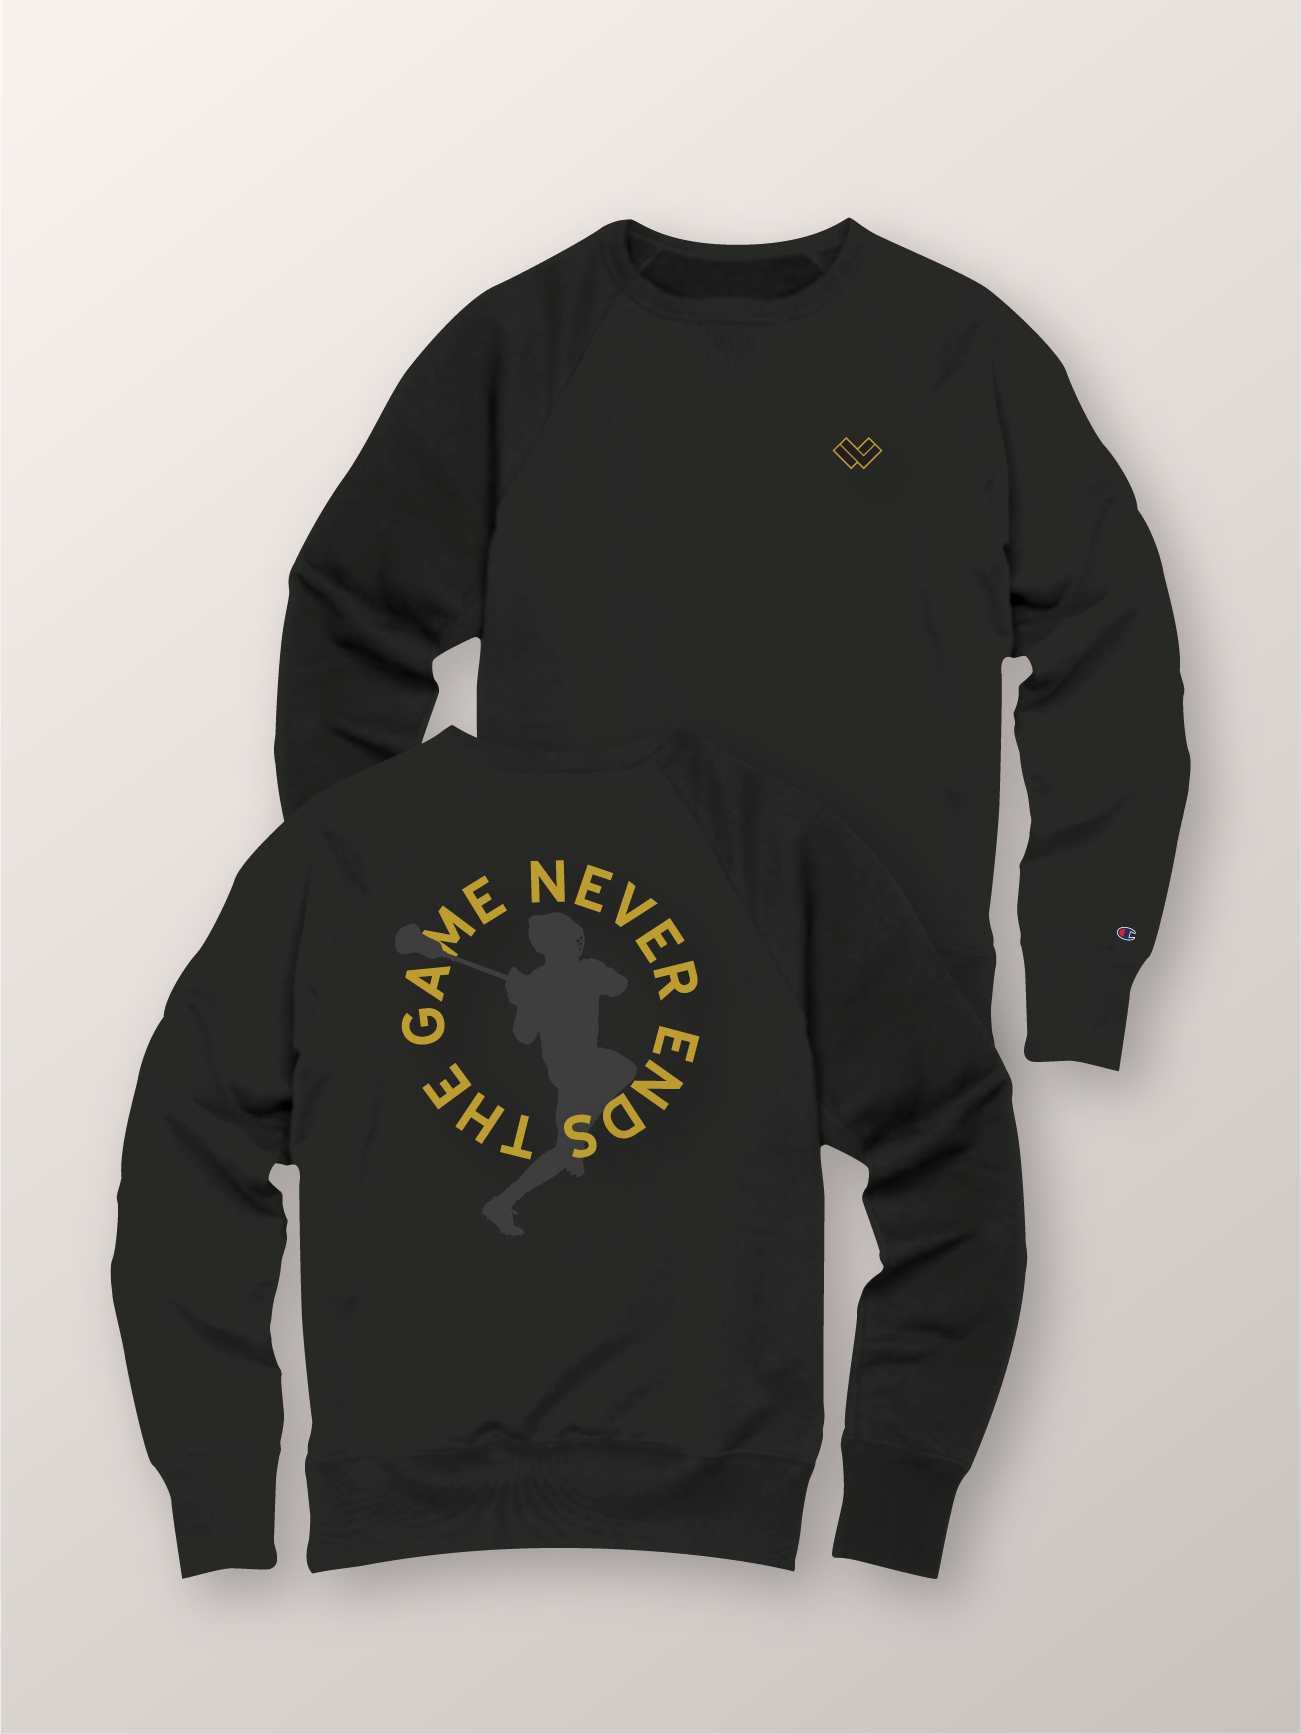  Champion’s Gamer Black Crew Neck Lacrosse Sweatshirt - Front and Back 